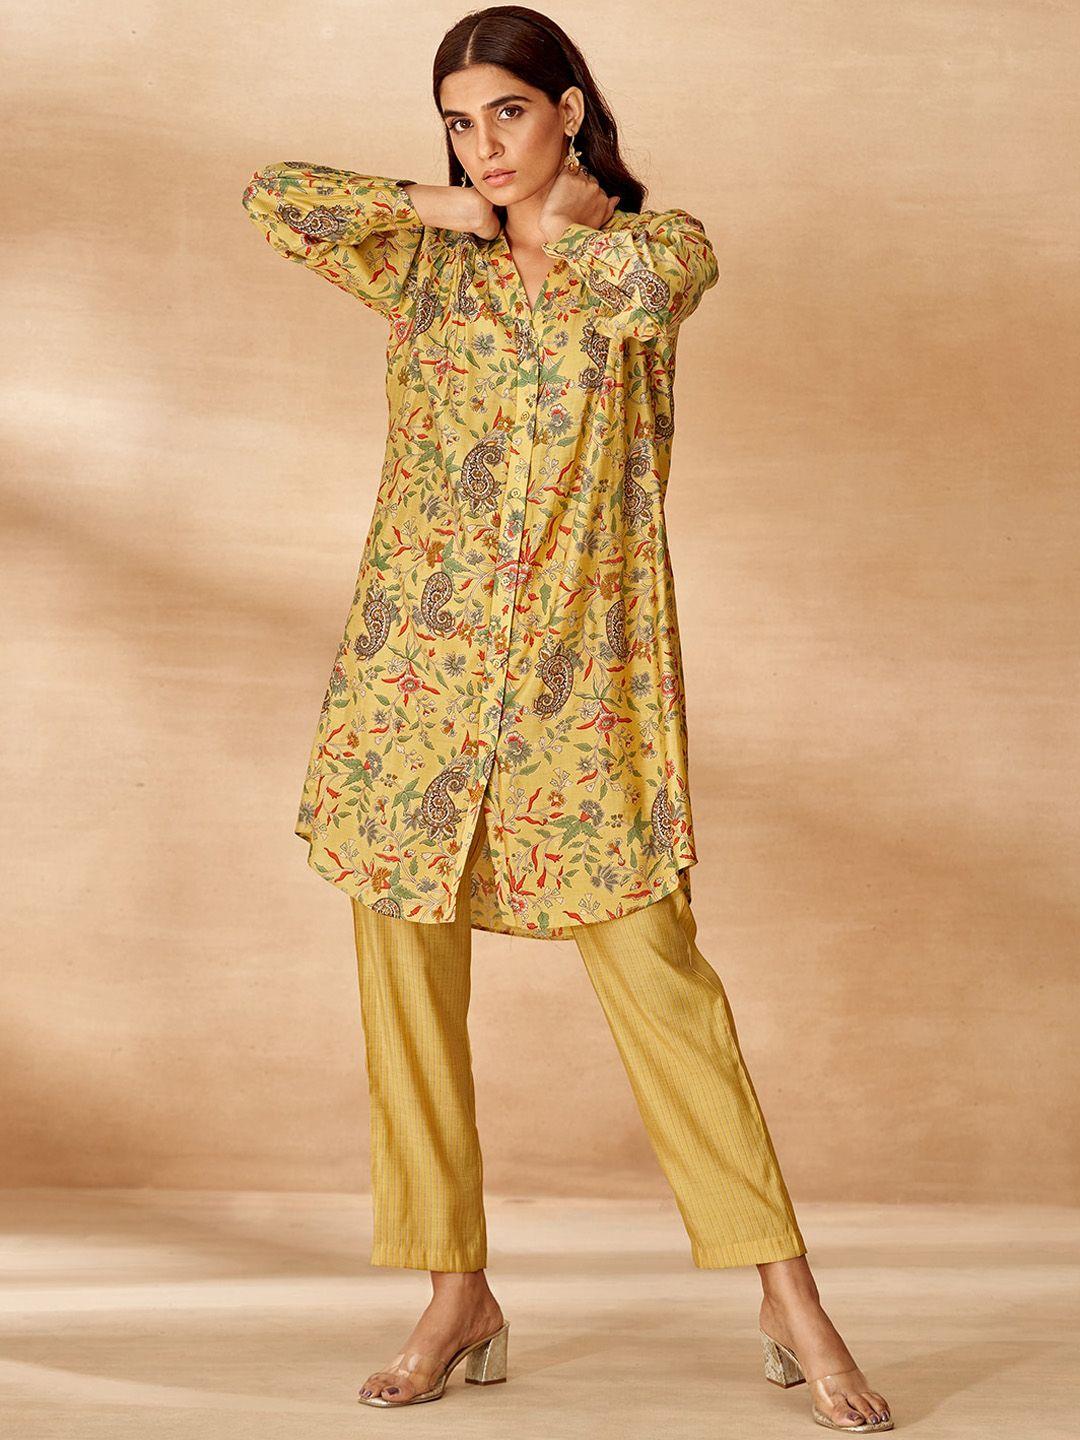 dresoul floral printed long sleeves shirt & trousers